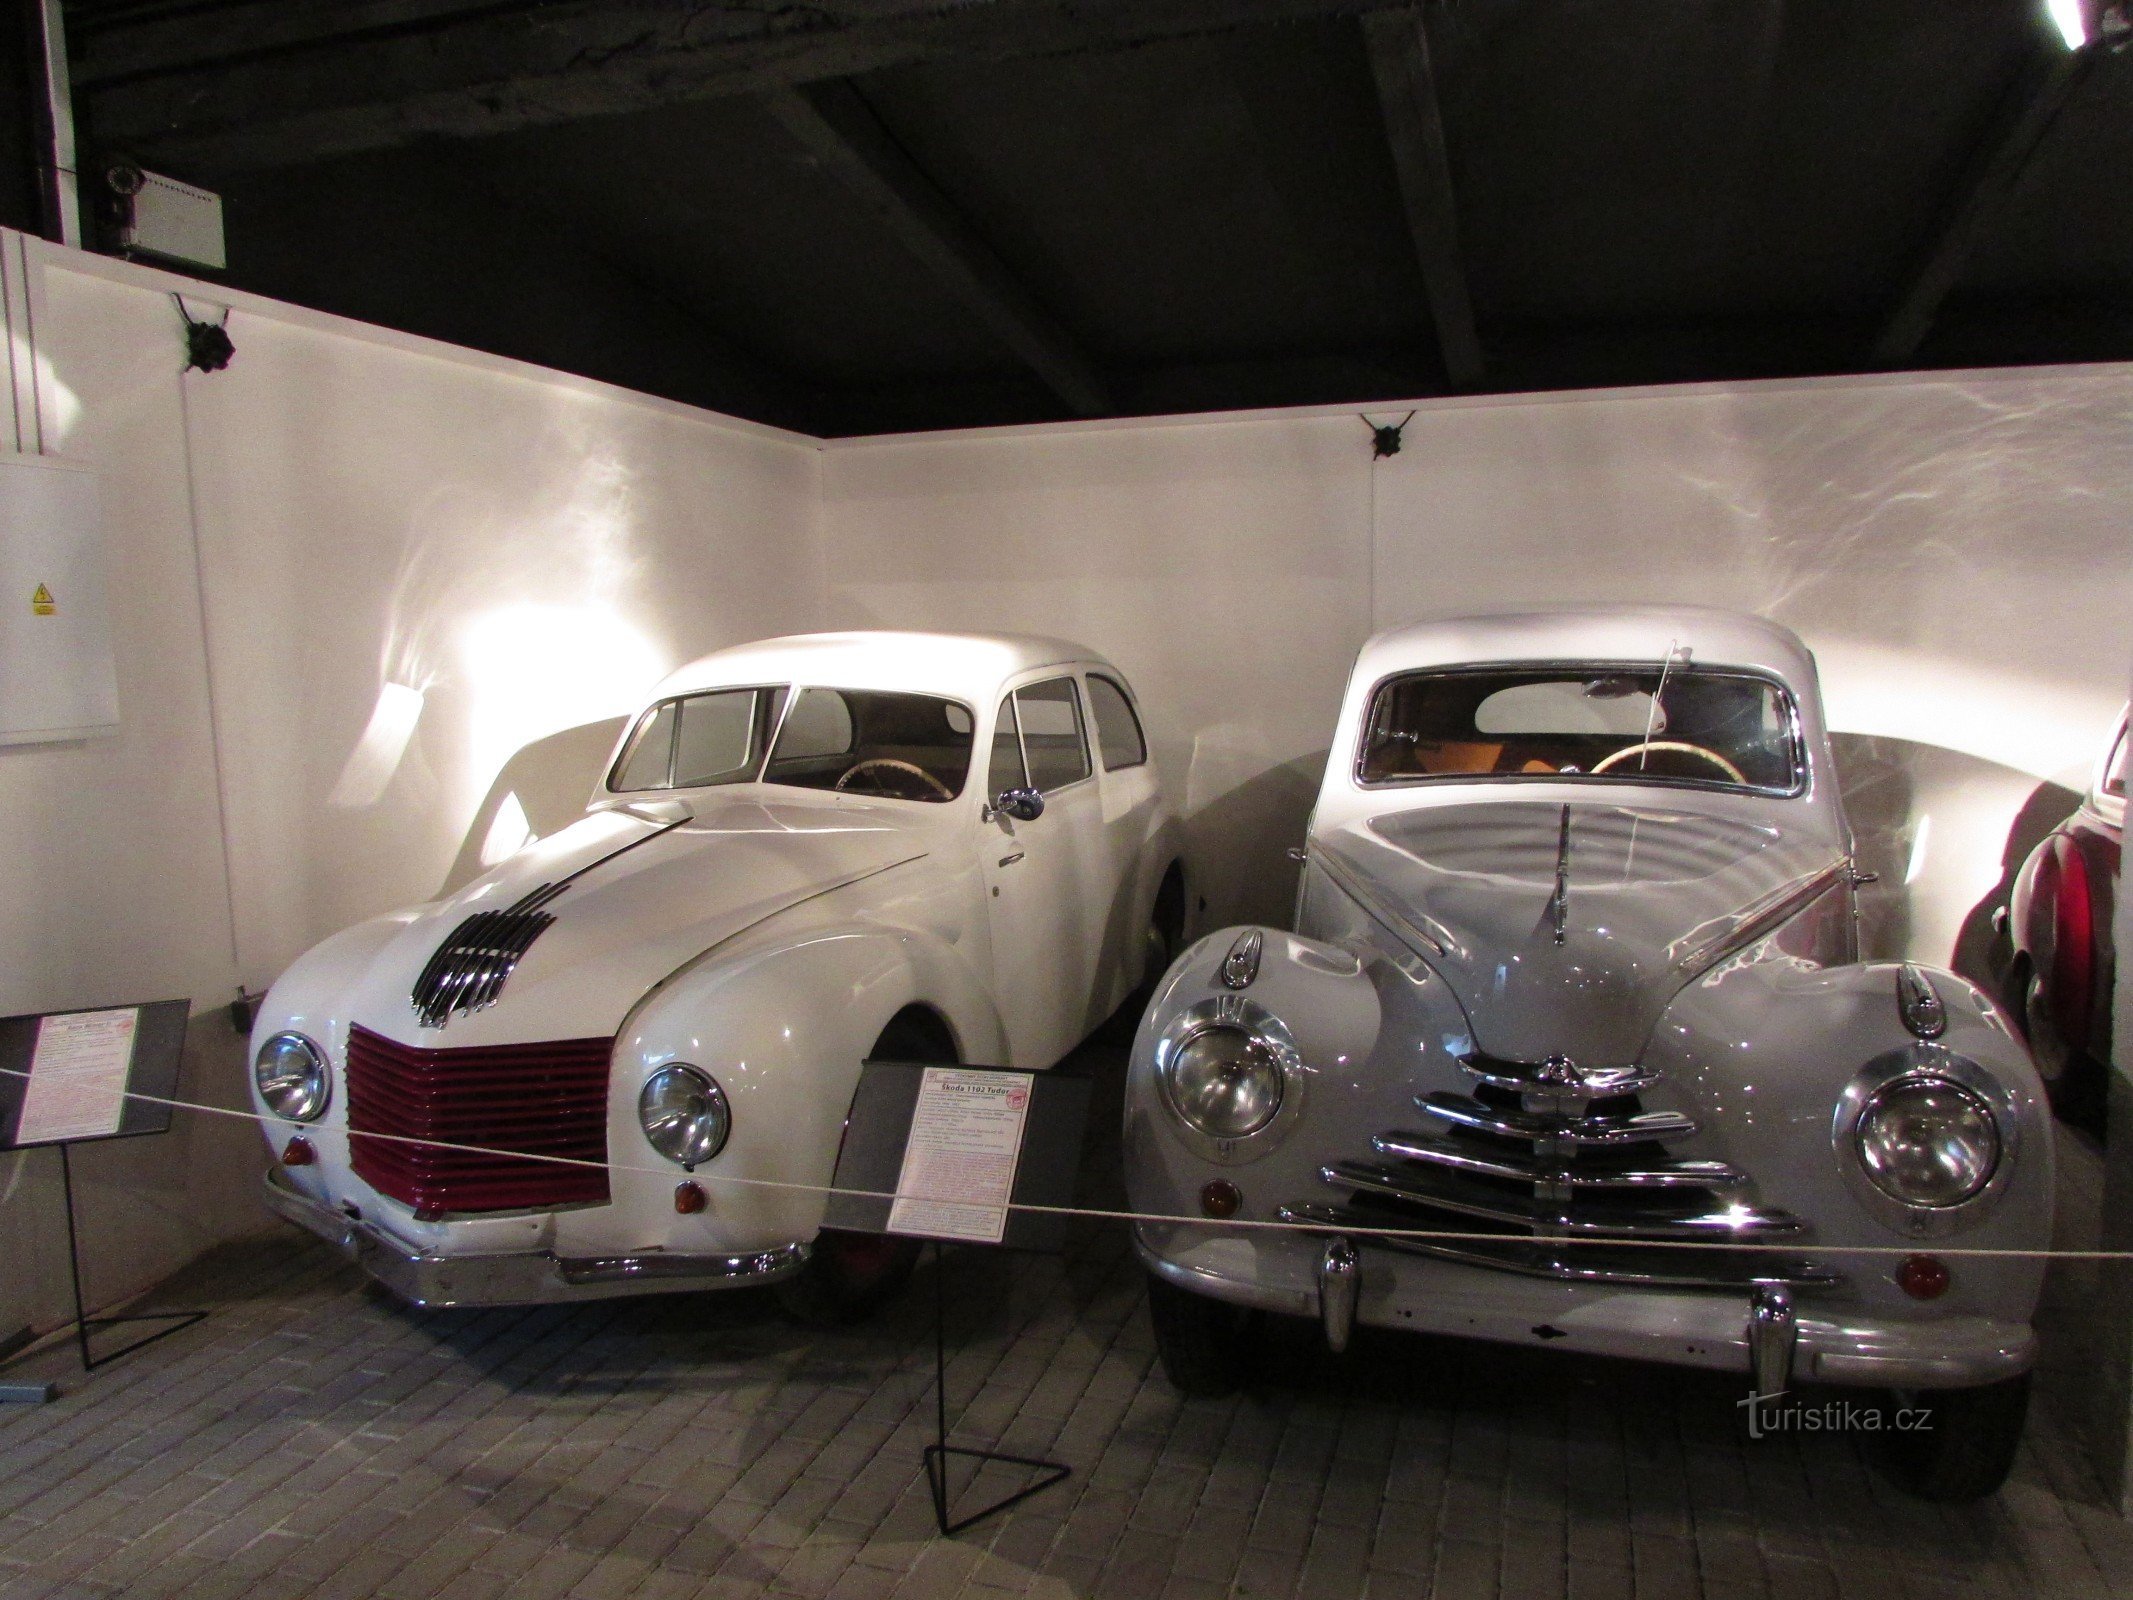 Museo del automóvil retro Strnadice